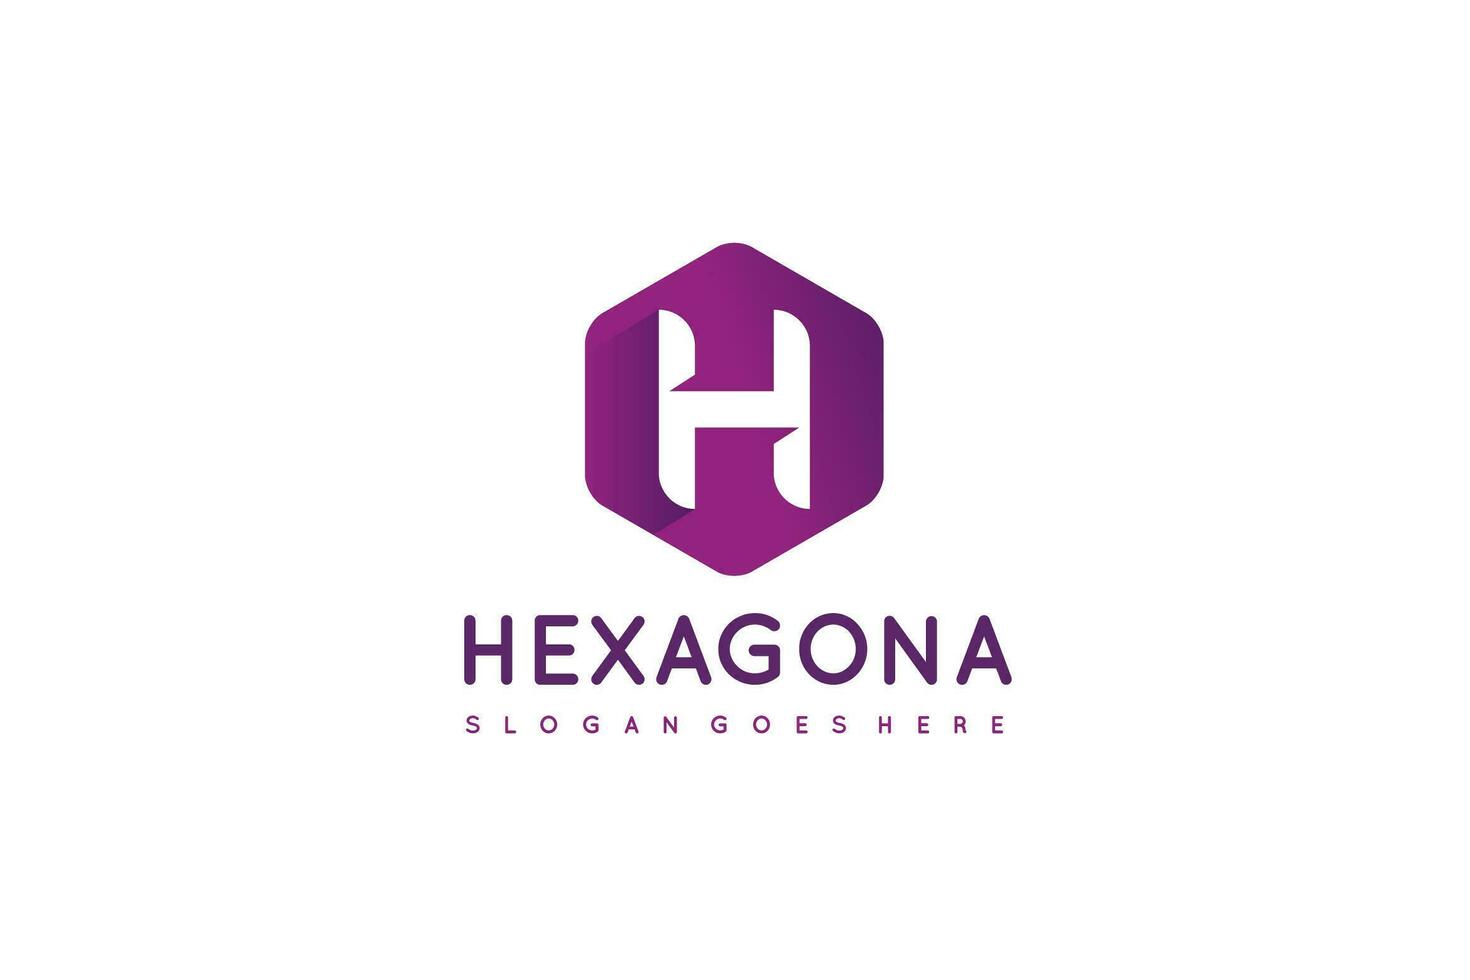 H Letter-Hexagon Logo vector